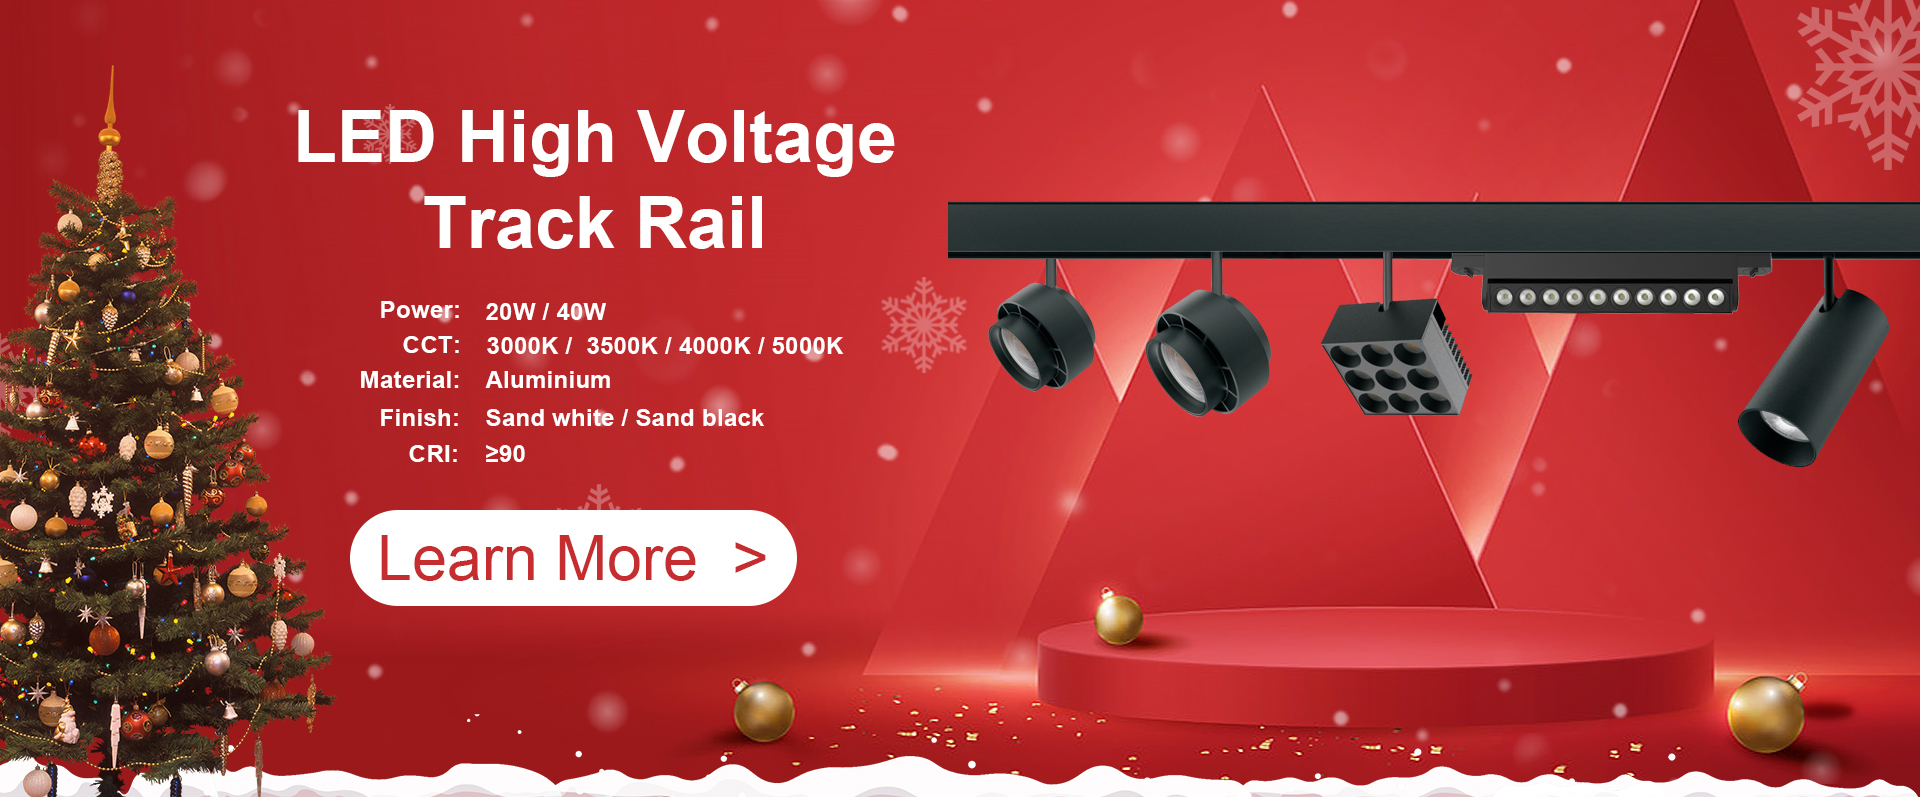 LED High Voltage Track Rail